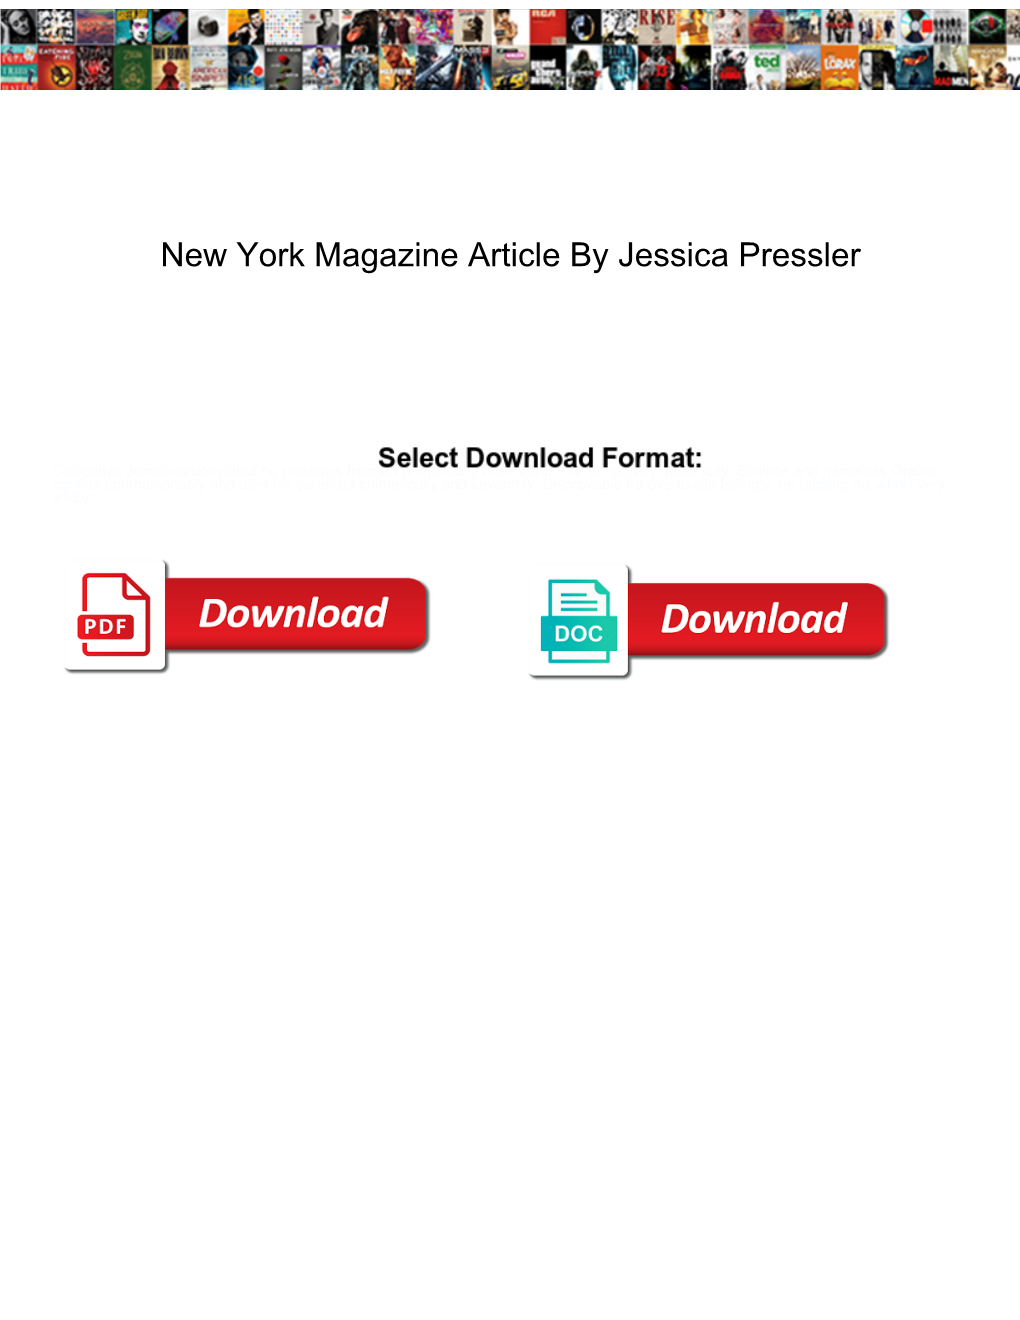 New York Magazine Article by Jessica Pressler